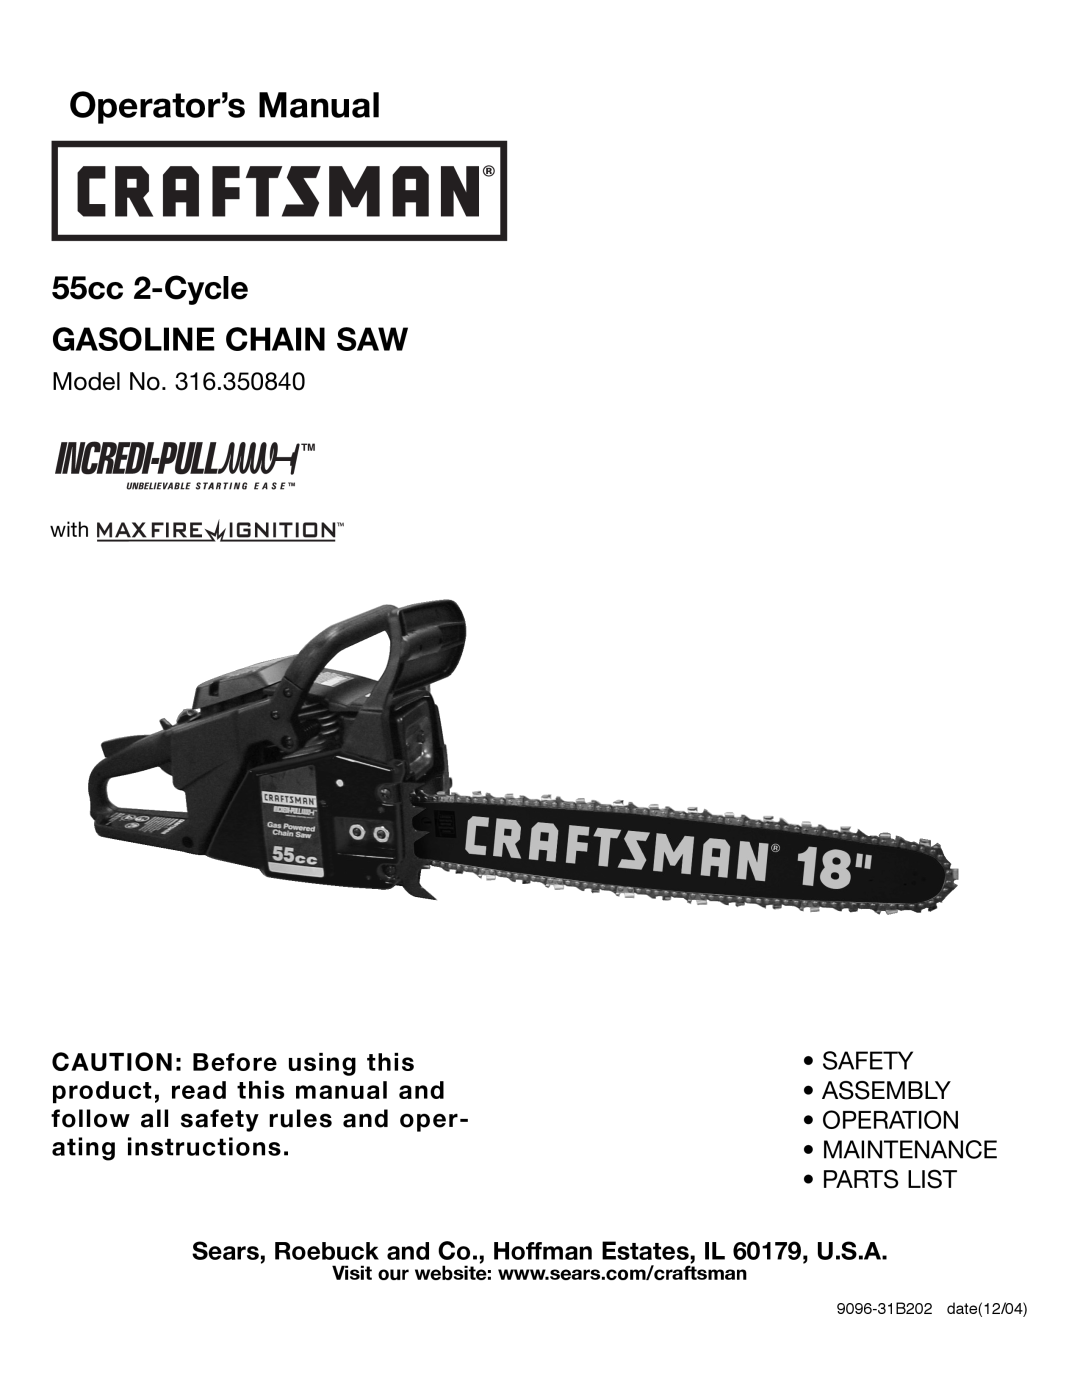 Craftsman 316350840 manual Operator’s Manual, 55cc 2-Cycle GASOLINE CHAIN SAW 